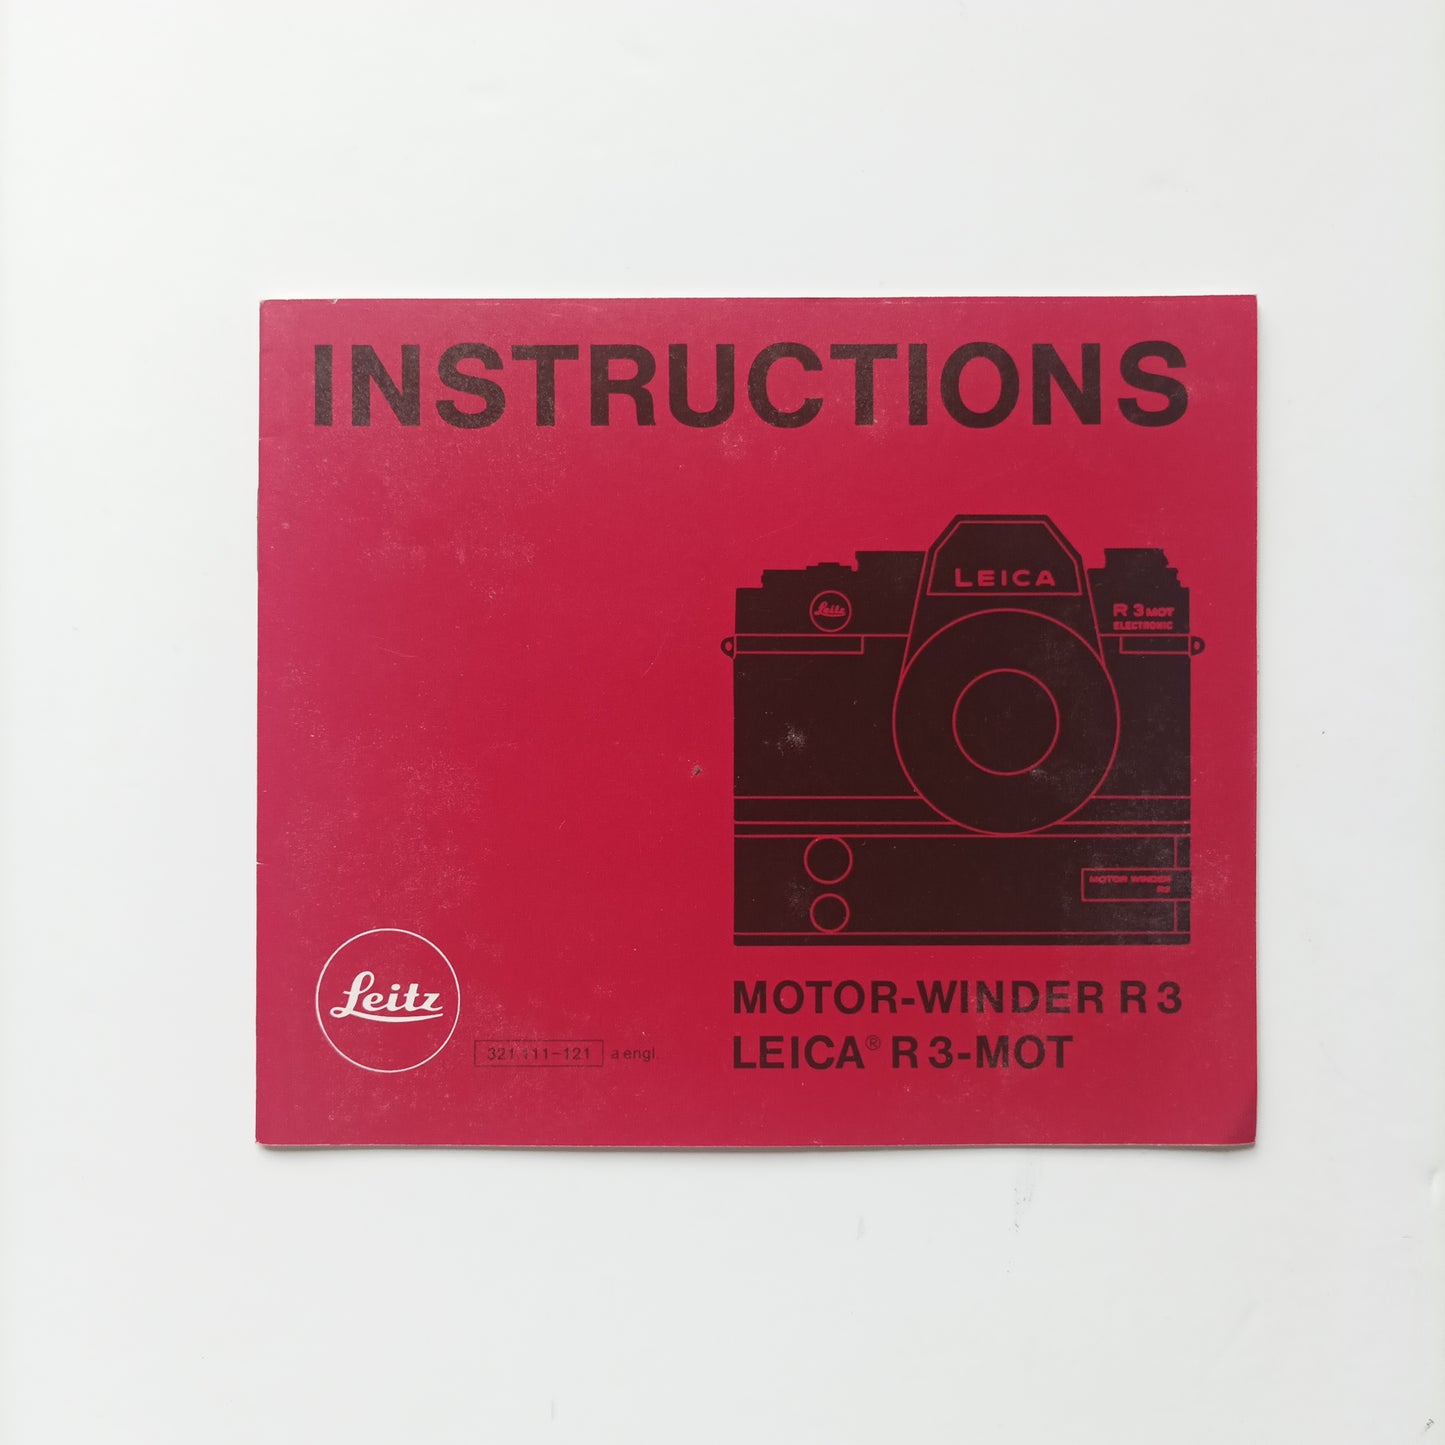 Leica motor winder r3 instructions